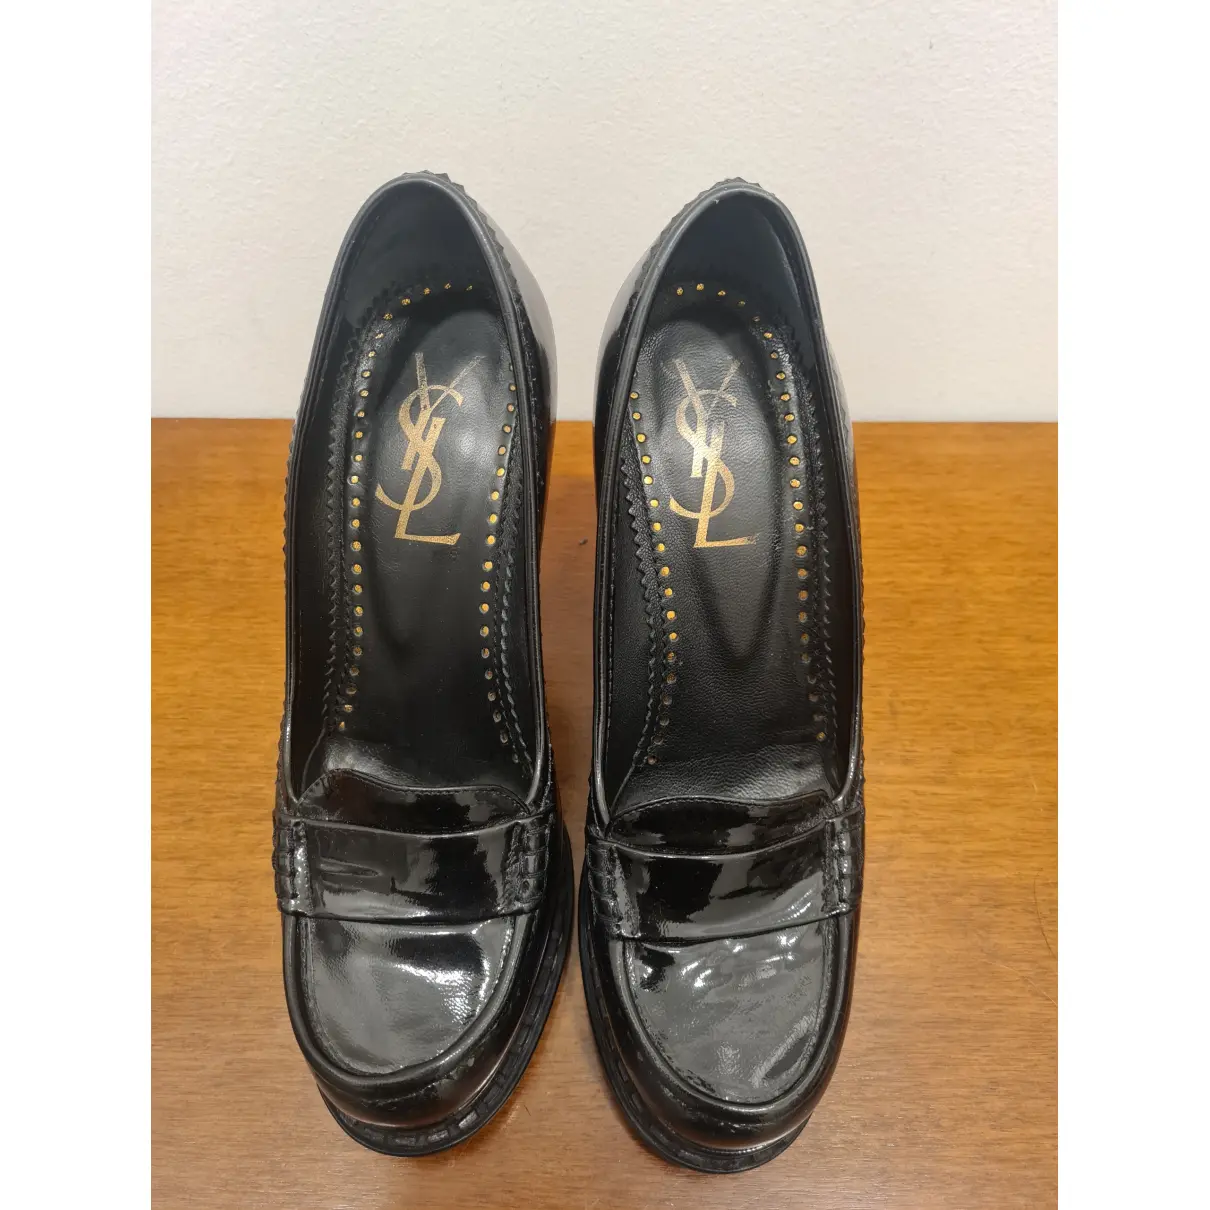 Patent leather heels Yves Saint Laurent